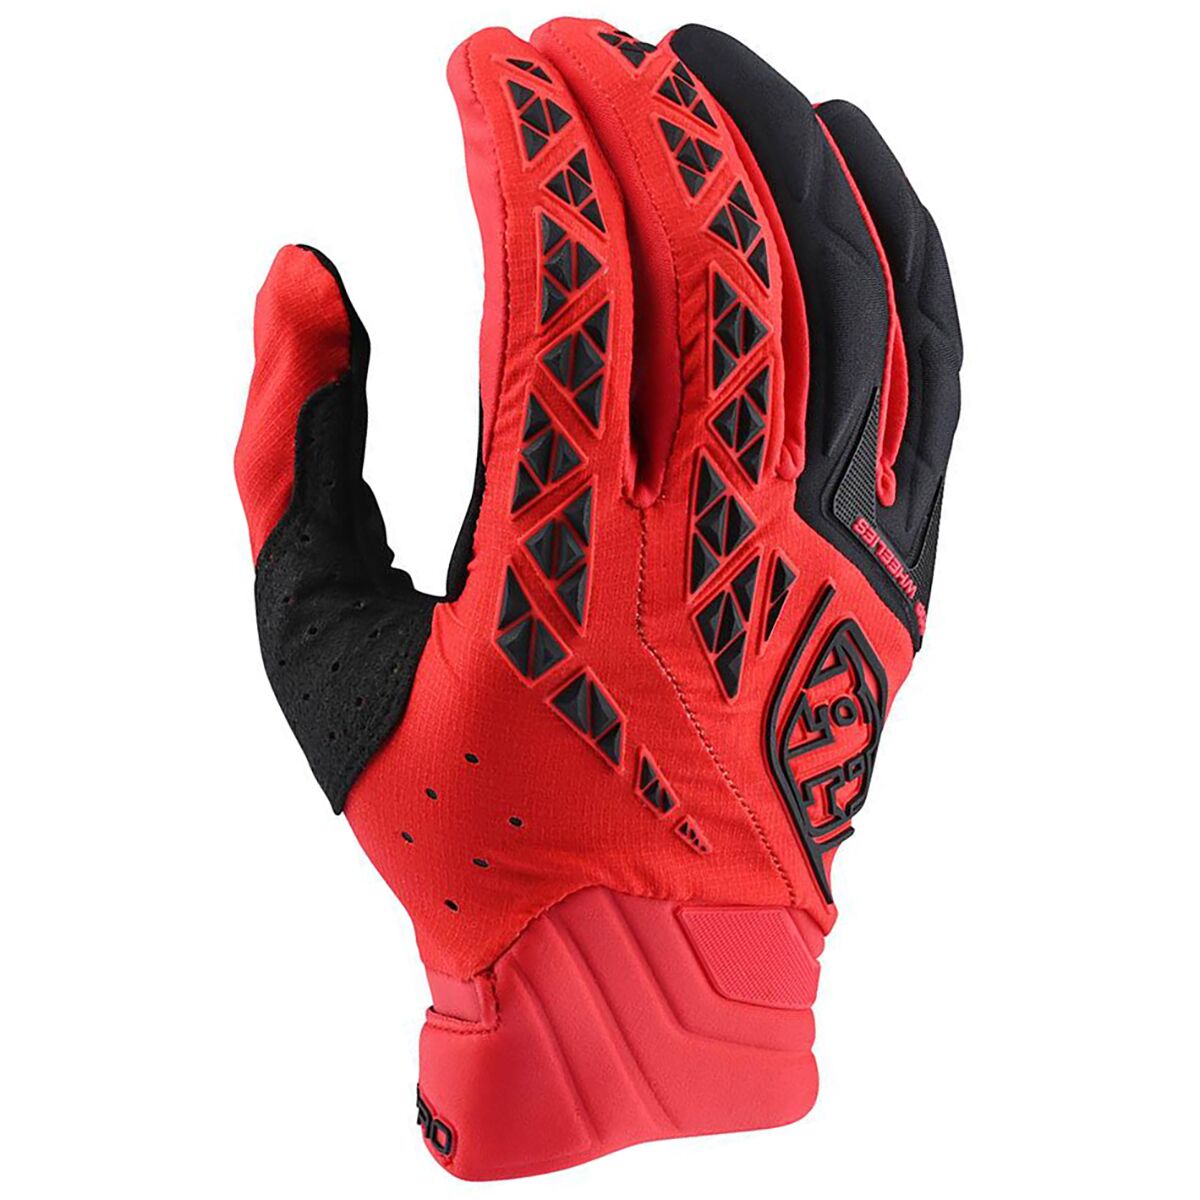 SE Pro Glove - Men's